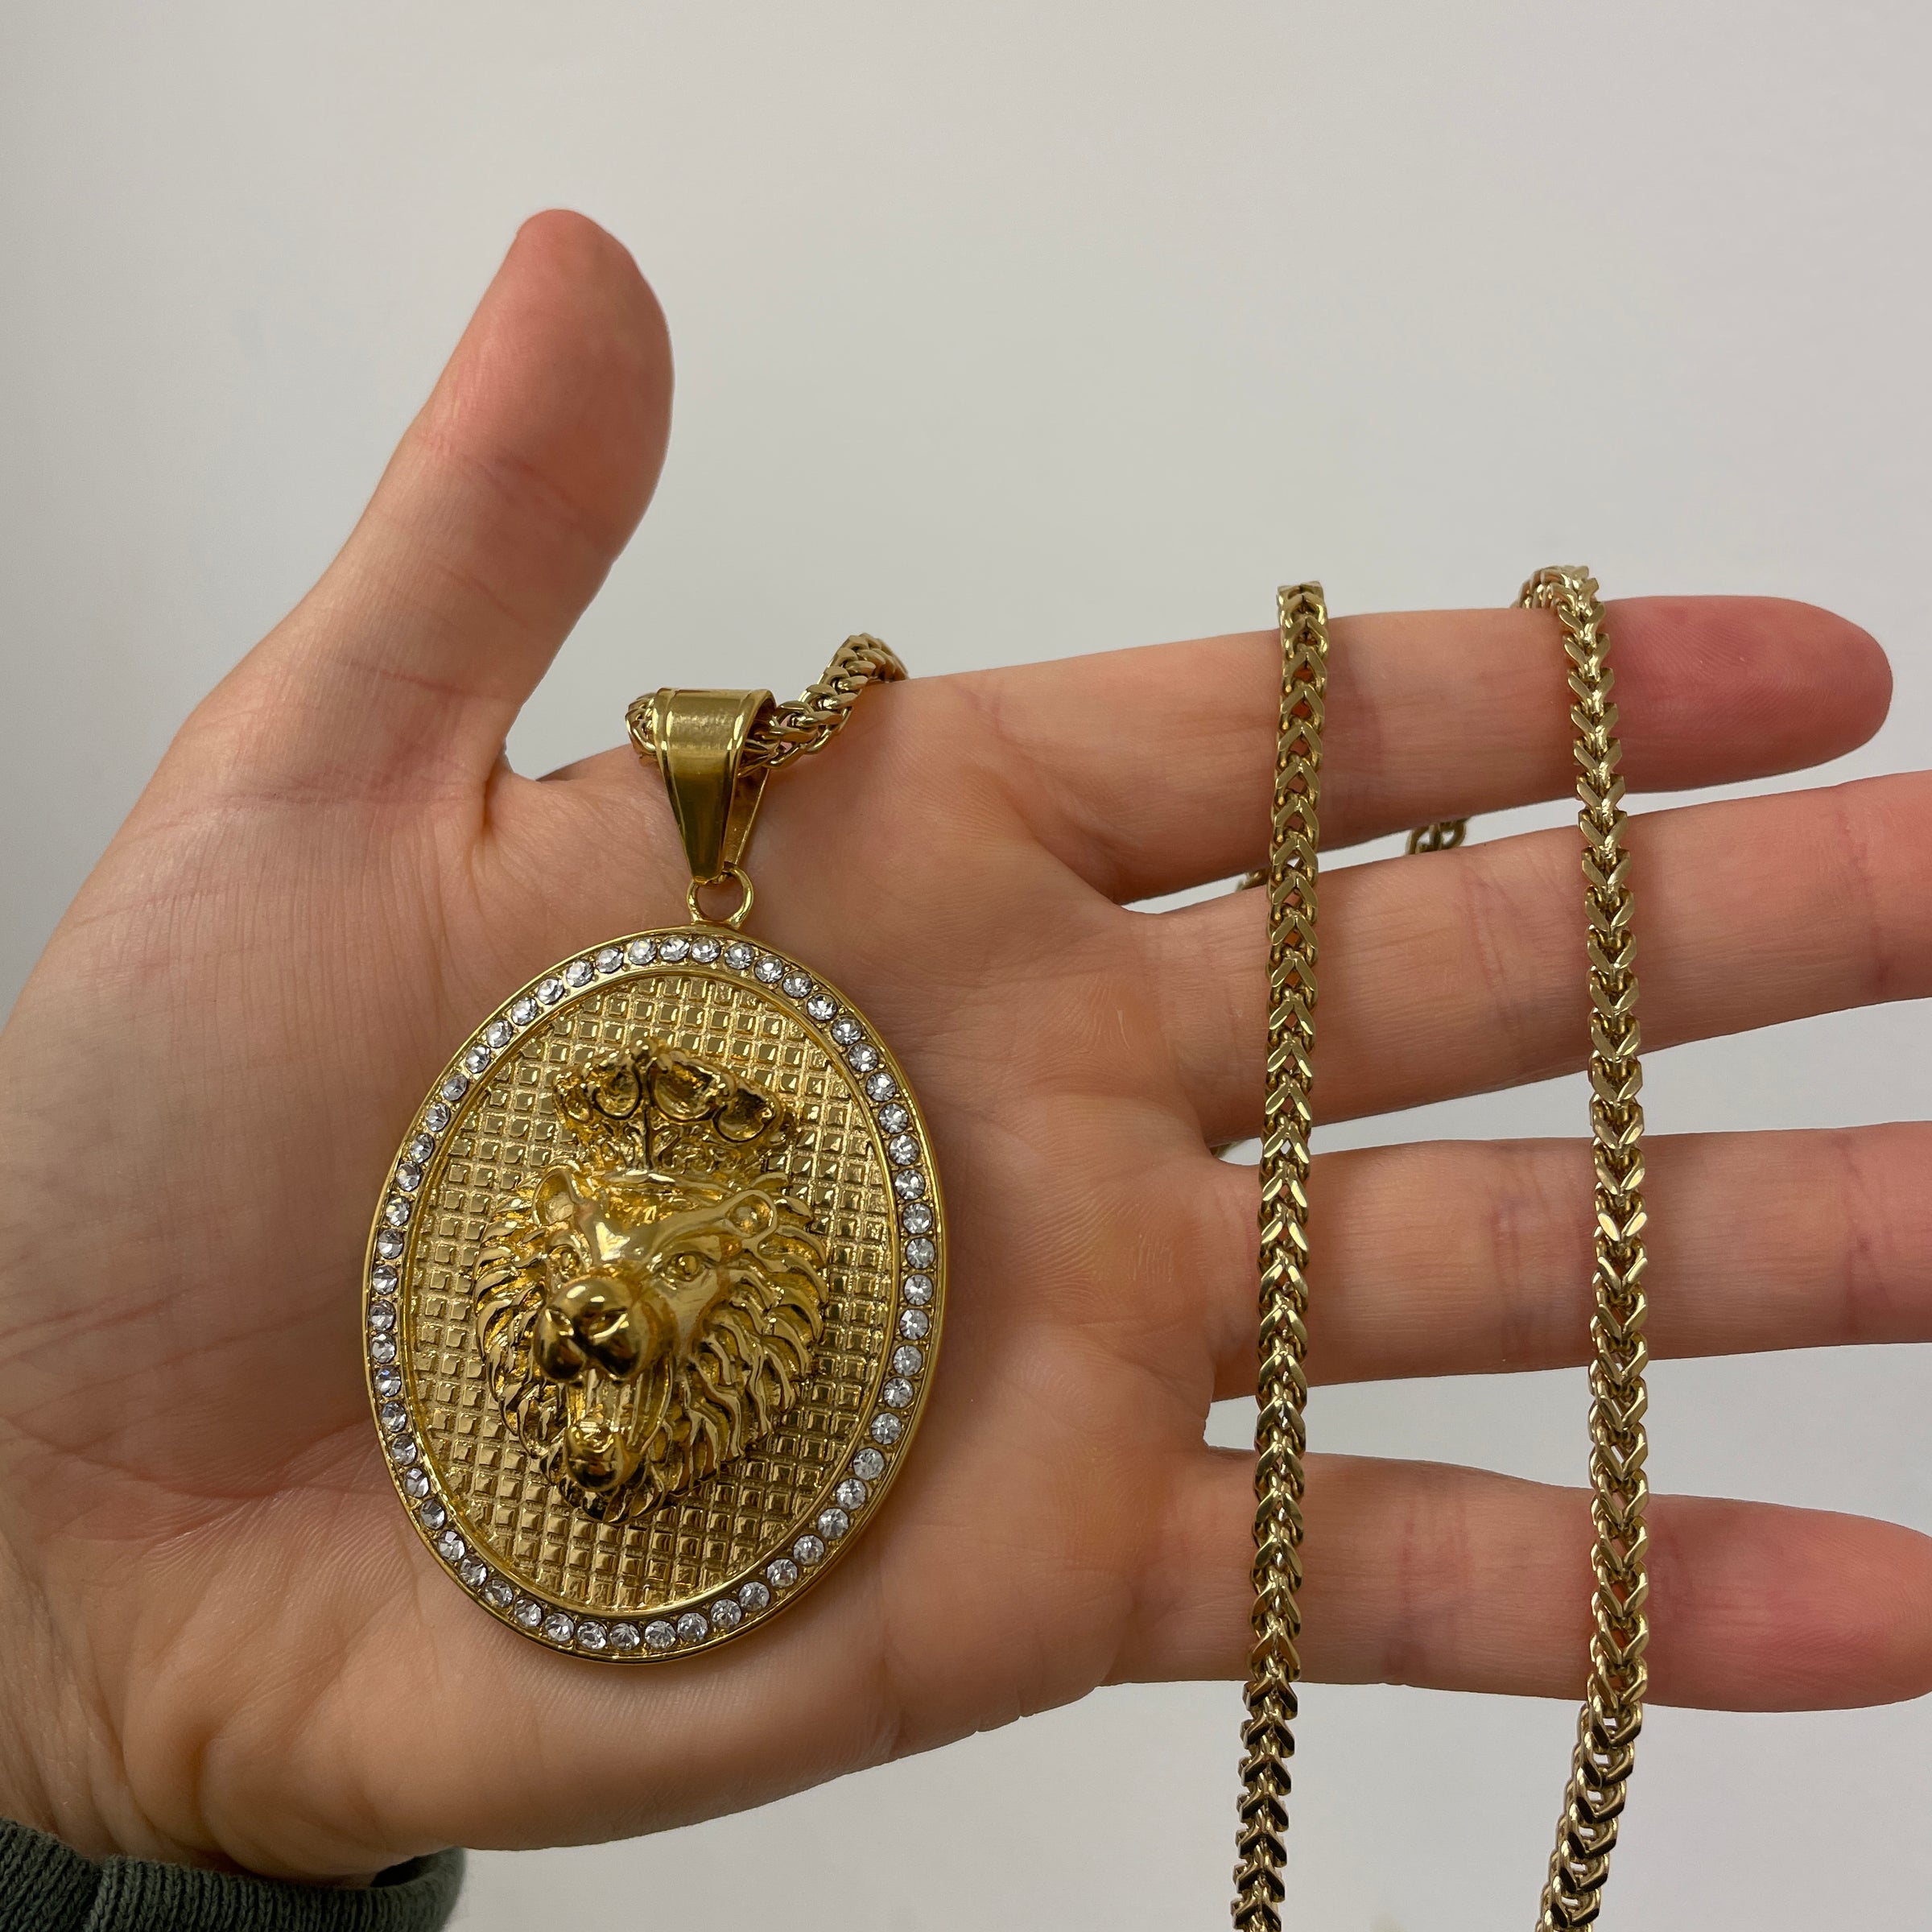 Lion Medallion Oval Pendant with 14K Gold Plated Franco Necklace 3mm 24" Set